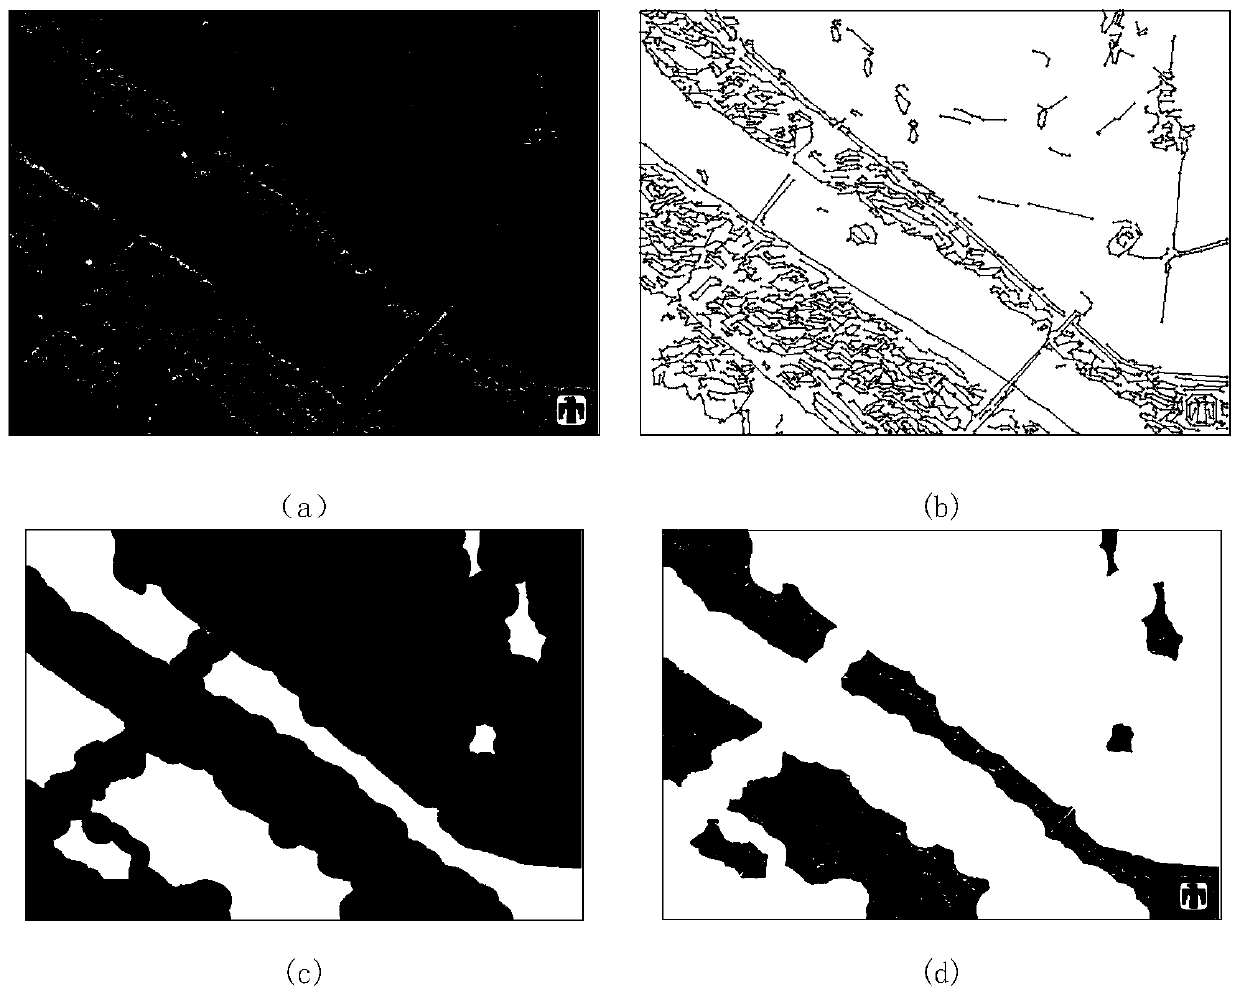 SAR Image Segmentation Method Based on Ridgelet Filter and Deconvolution Structure Model